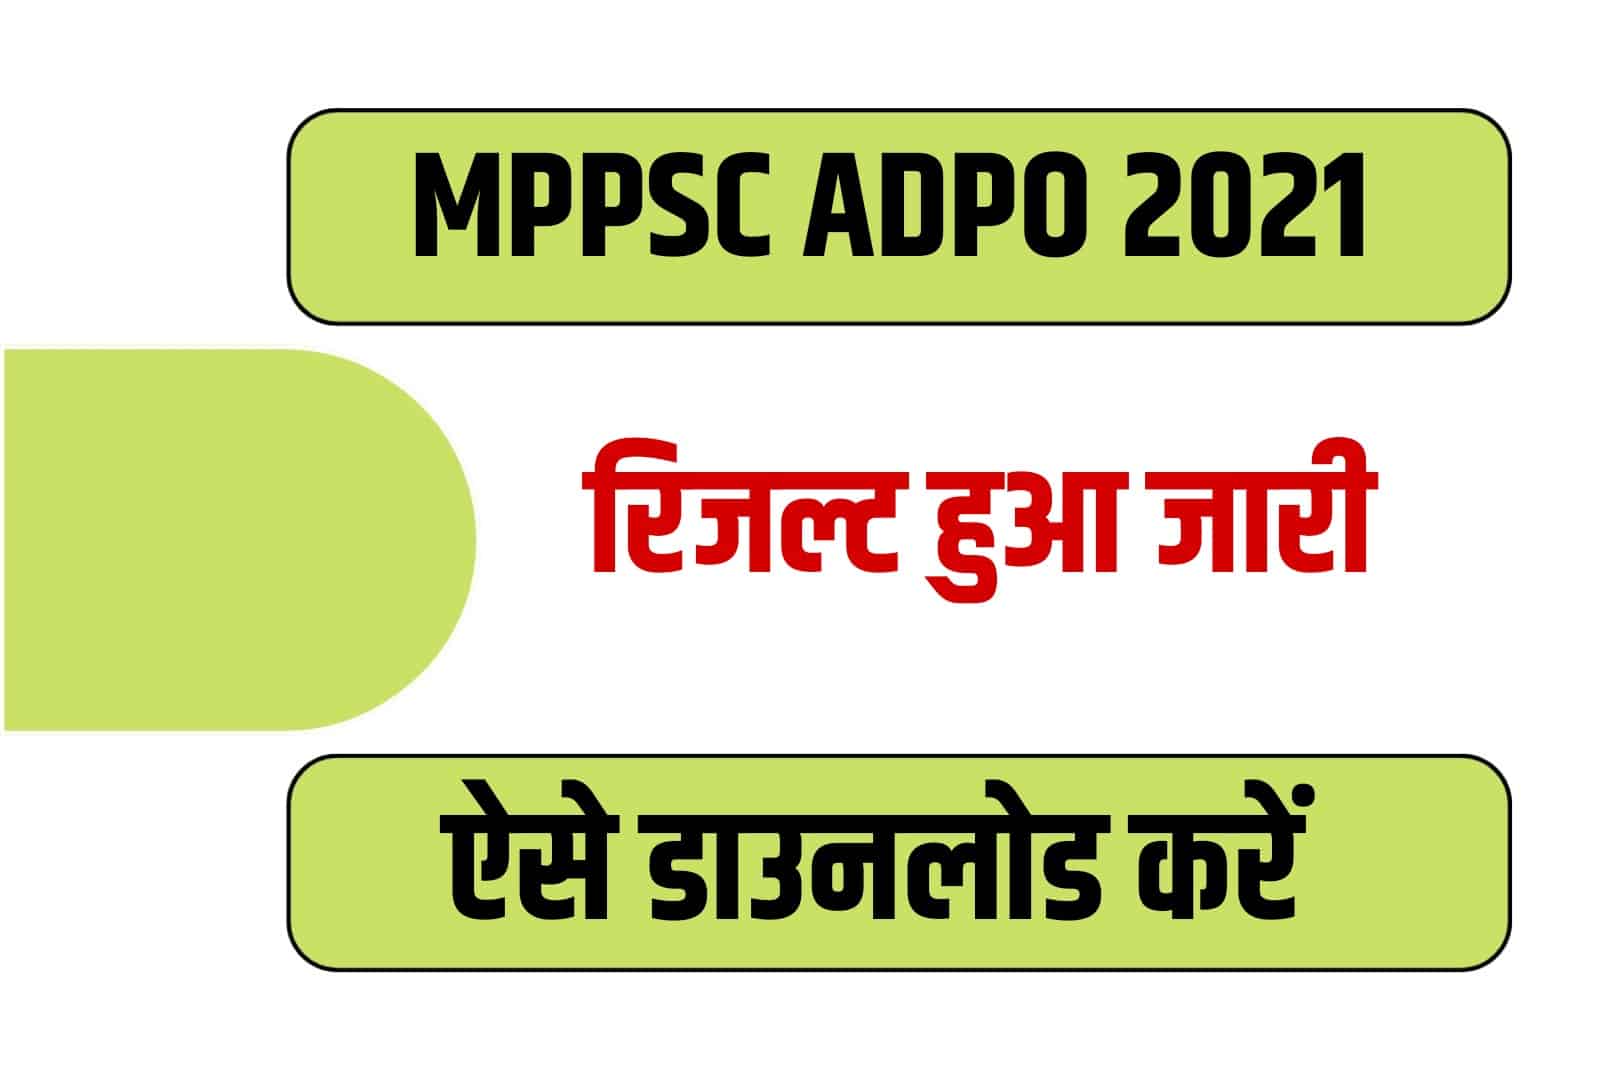 MPPSC ADPO 2021 Result | एमपीपीएससी एडीपीओ रिजल्ट